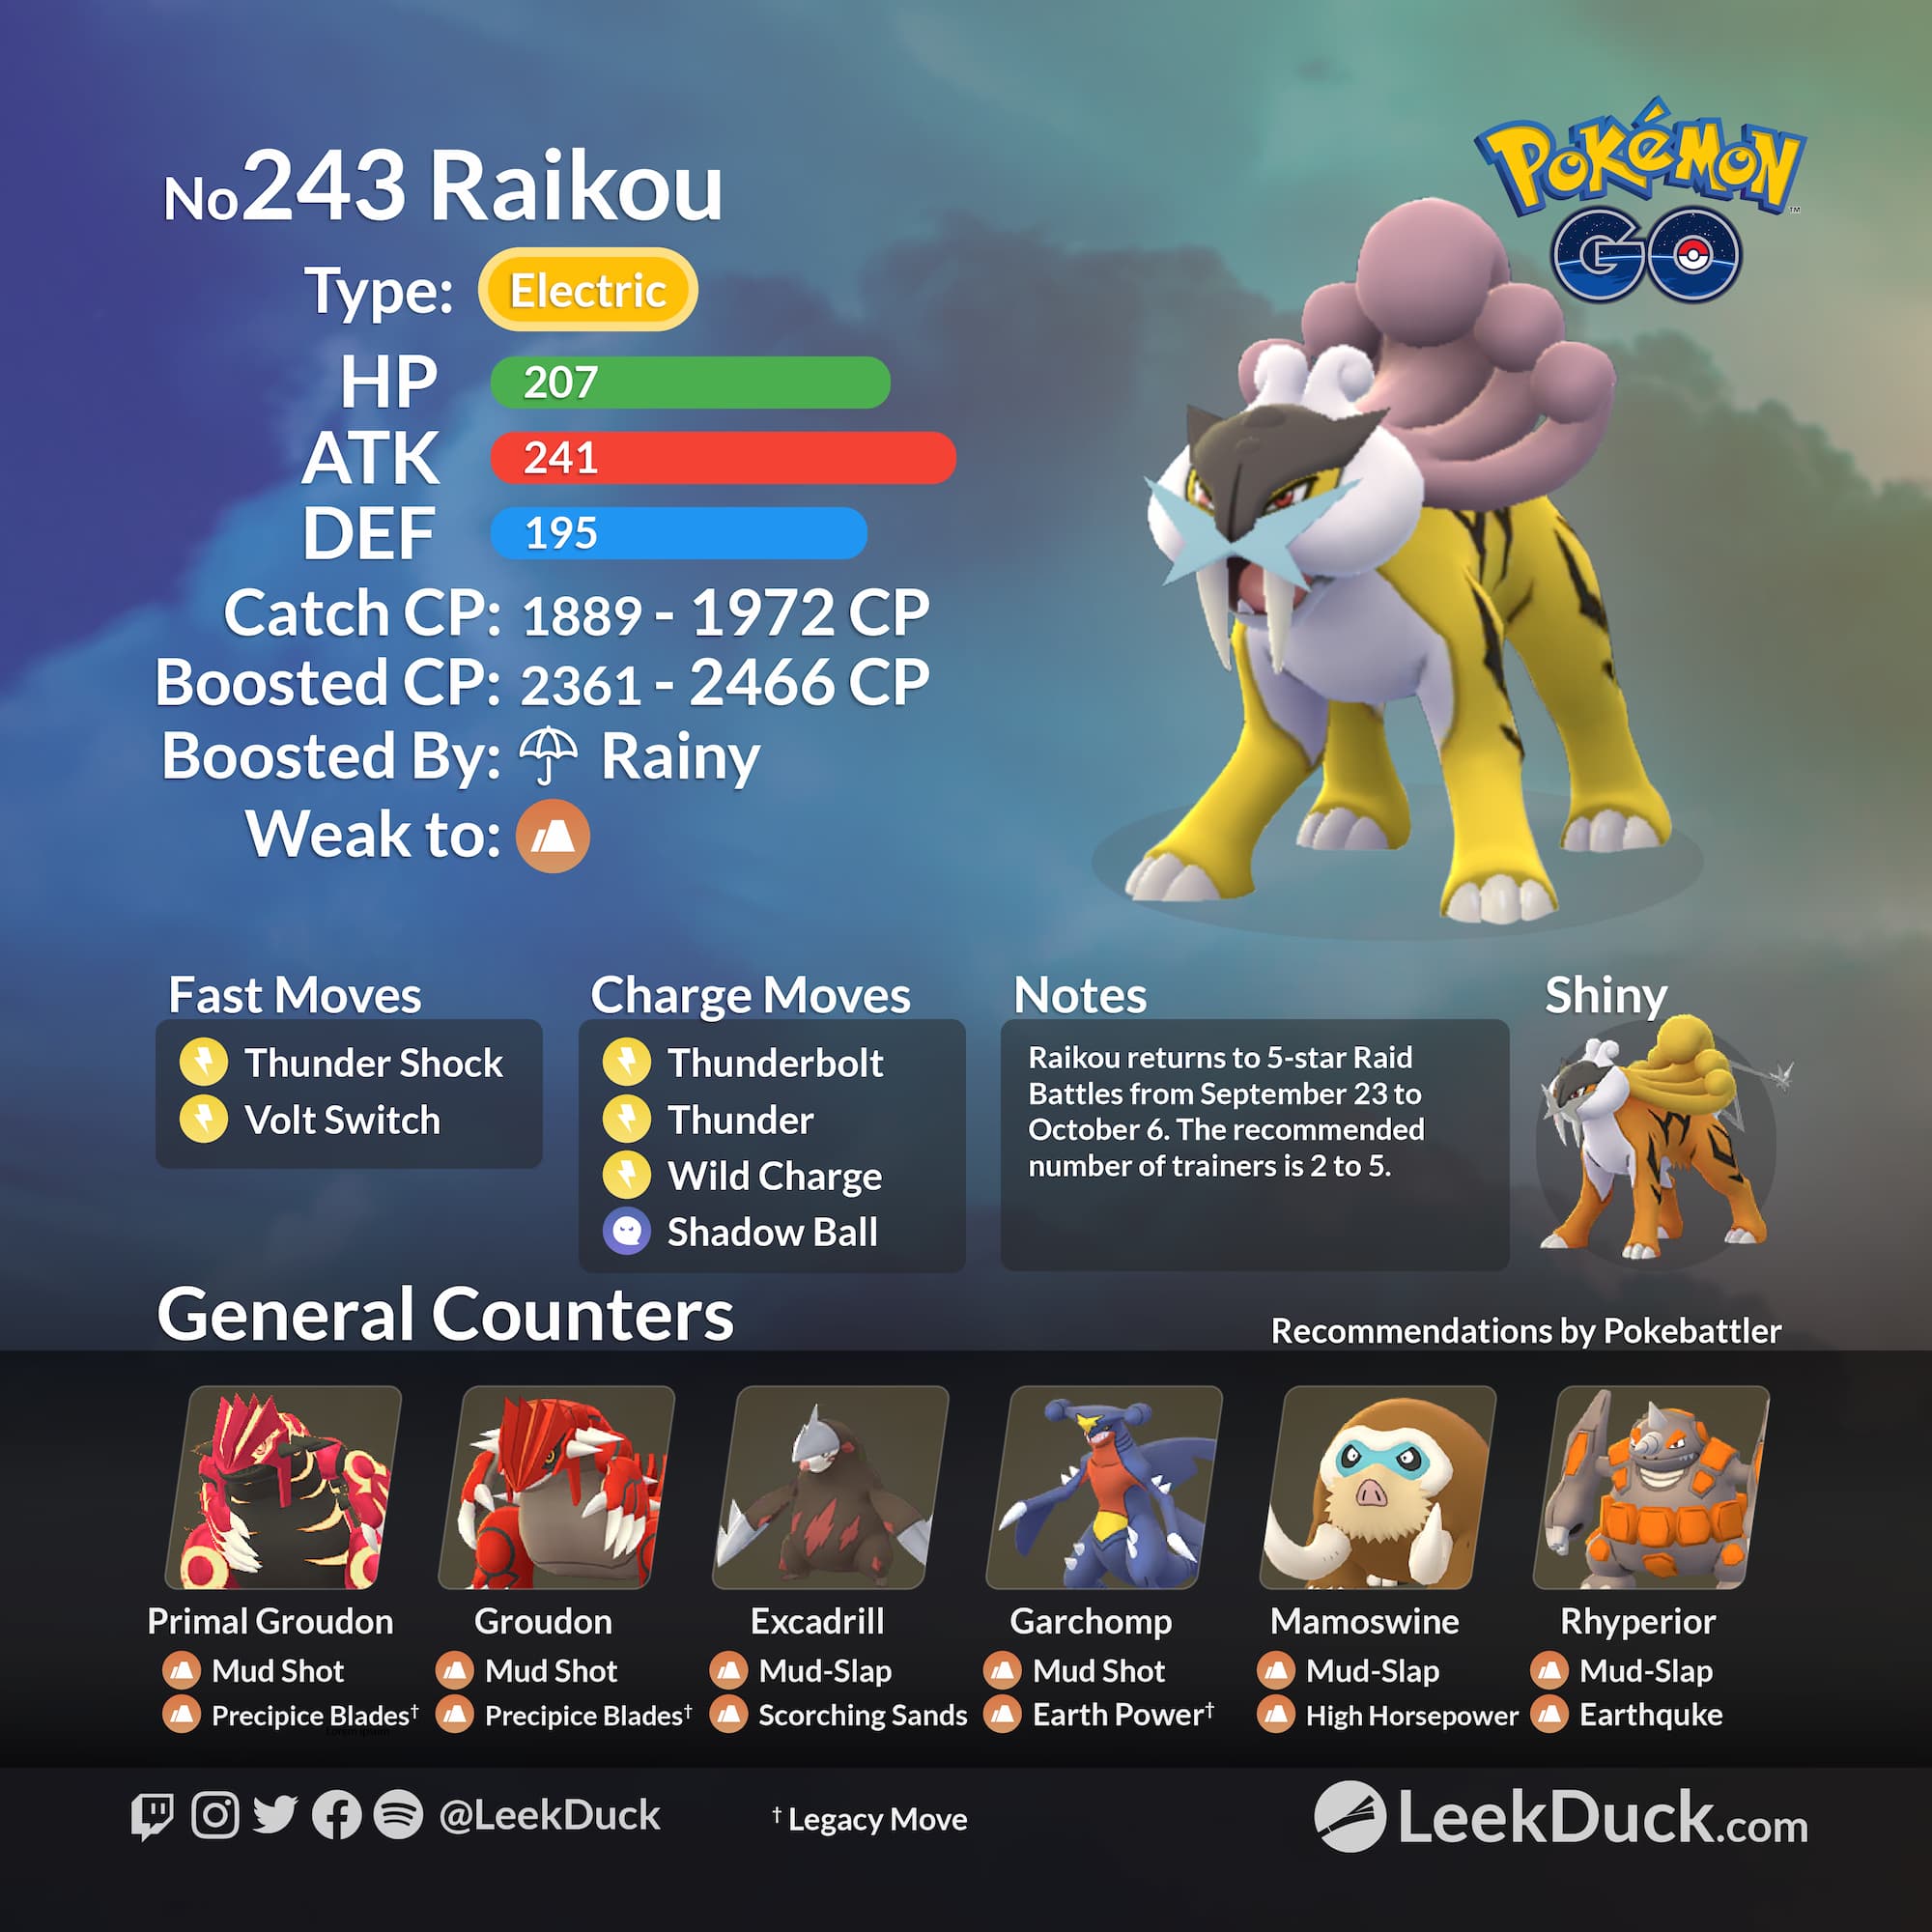 Pokemon GO Raikou, Entei, and Suicune Raid Guide